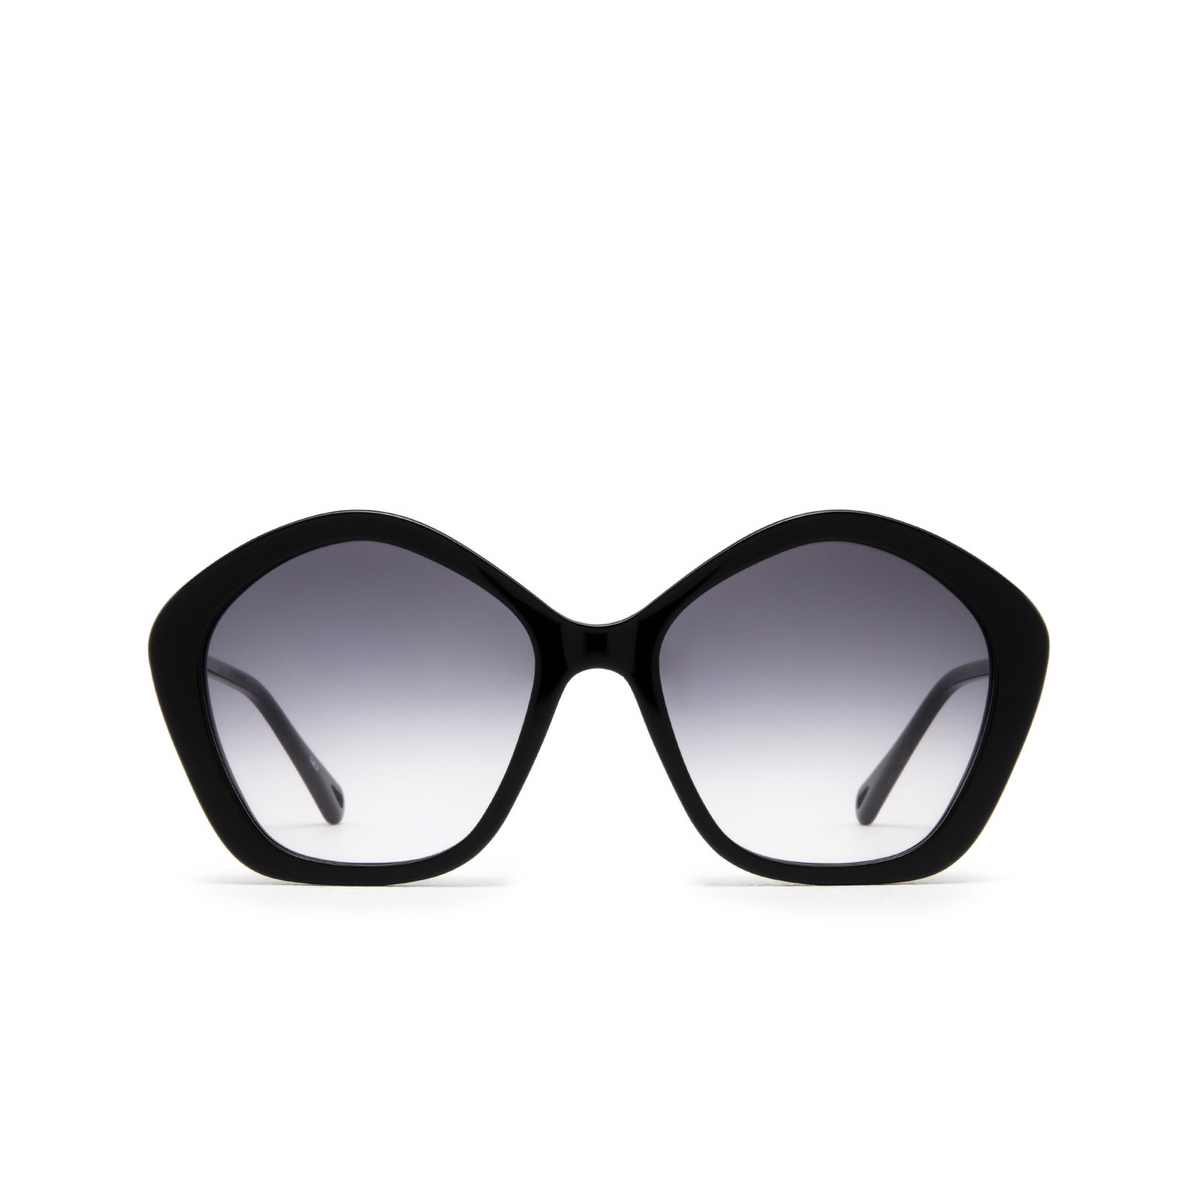 Chloé® Irregular Sunglasses: CH0082S color Black 005 - front view.